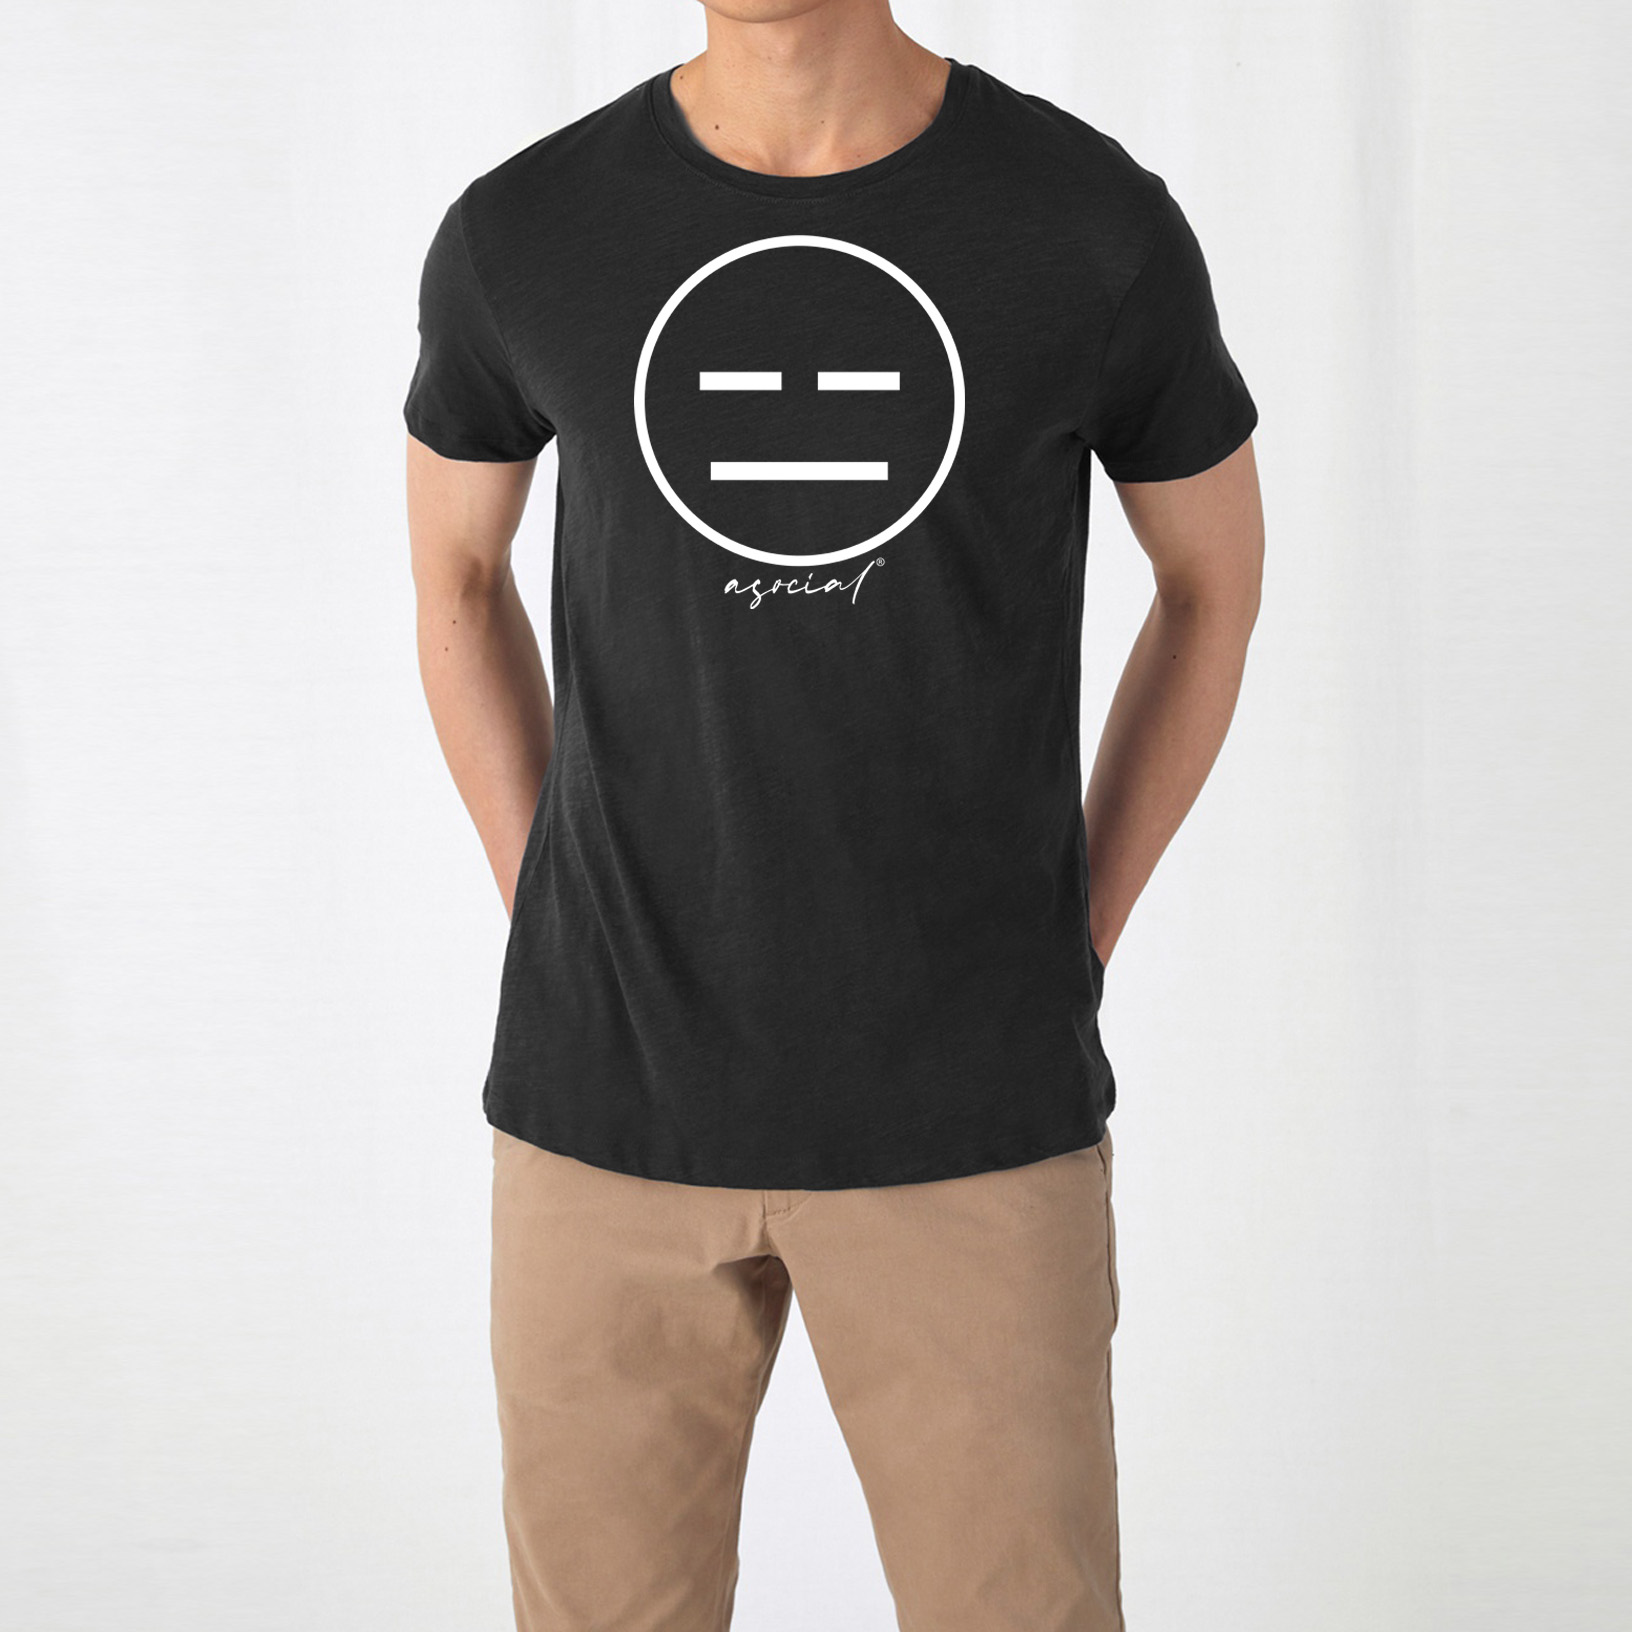 T-Shirt Uomo Modello: "Asocial Classic"